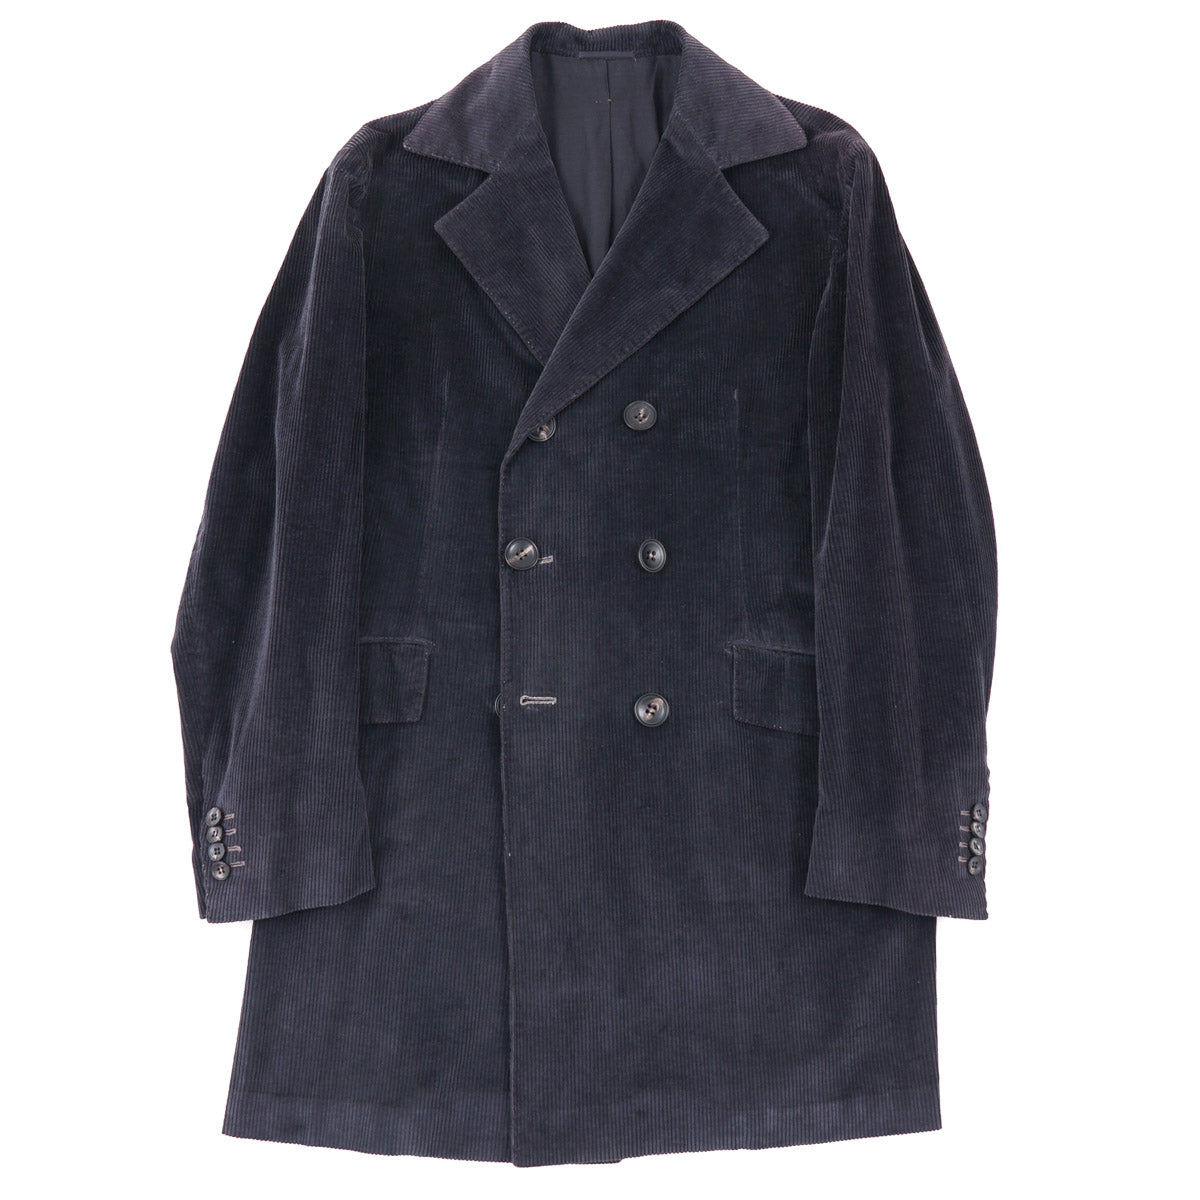 Kiton Cotton-Cashmere Corduroy Overcoat - Top Shelf Apparel